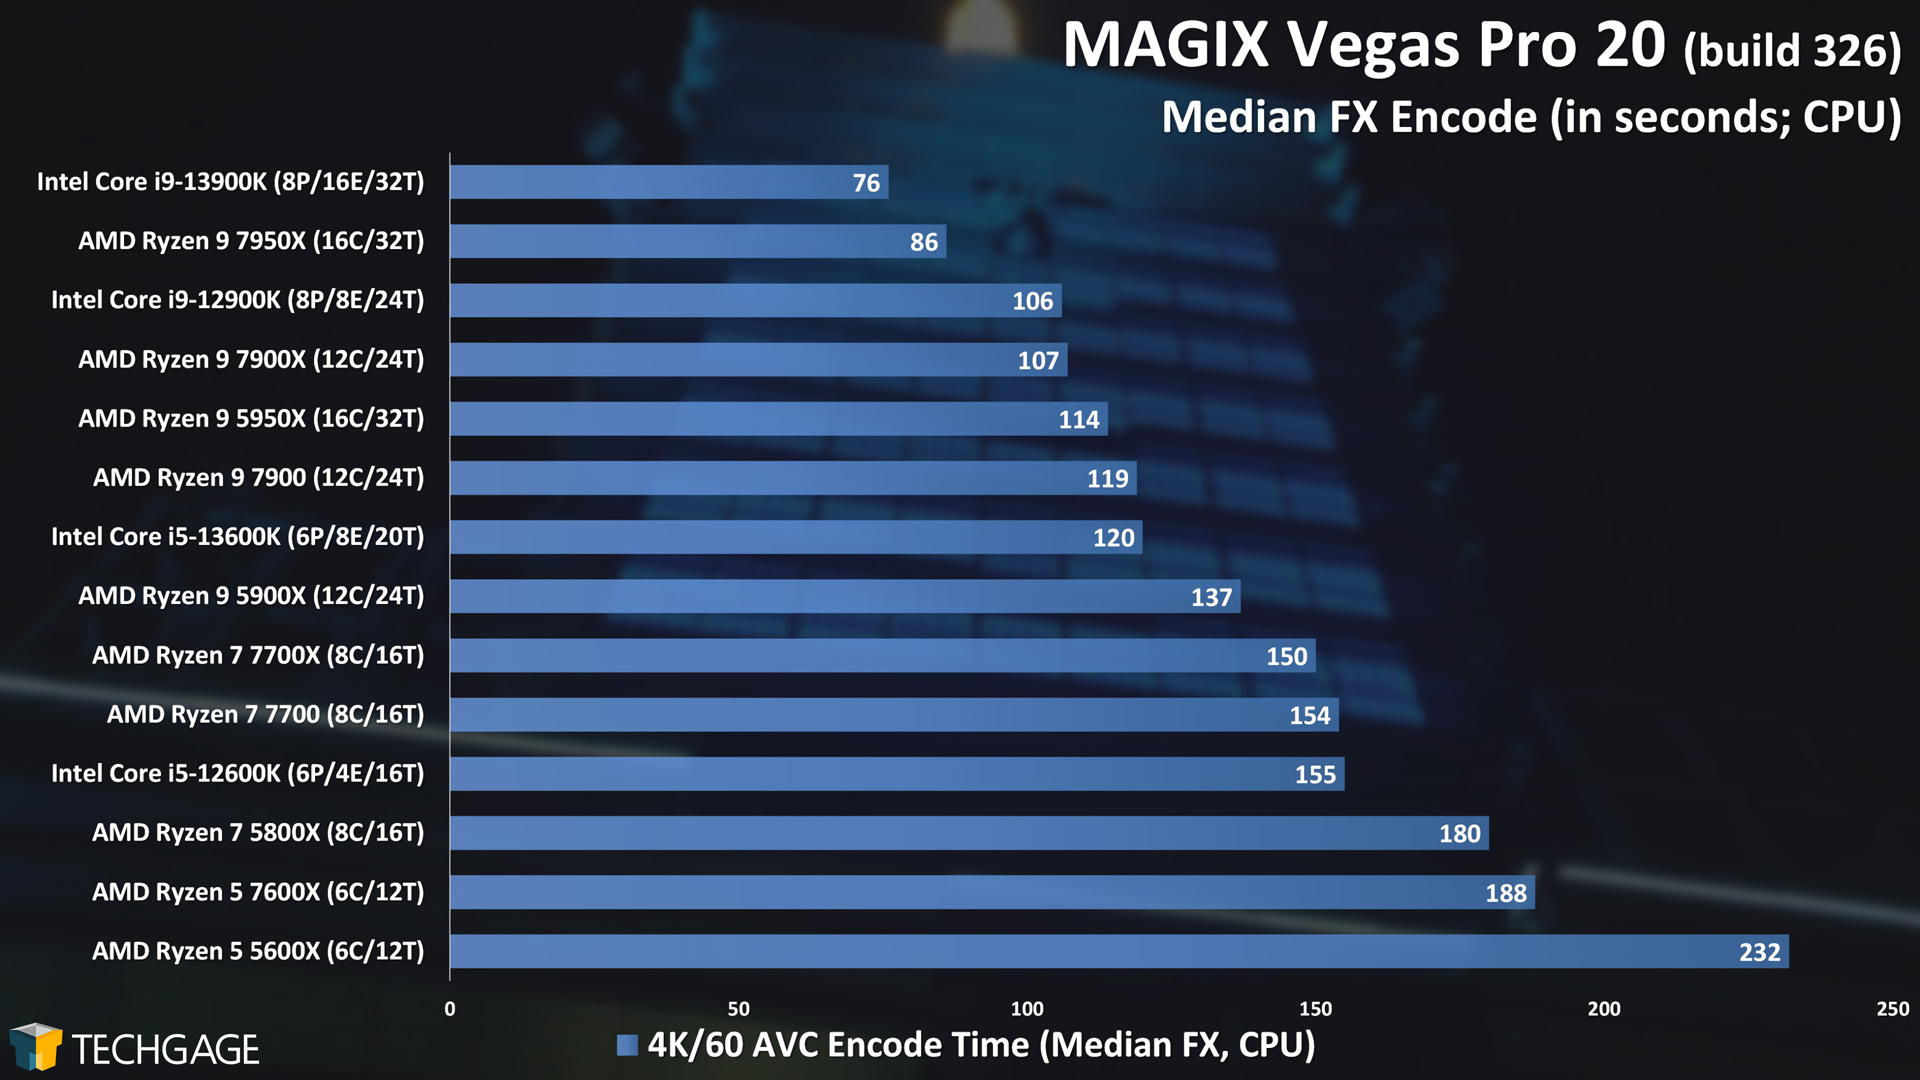 VEGAS Pro - Median FX CPU Encoding Performance